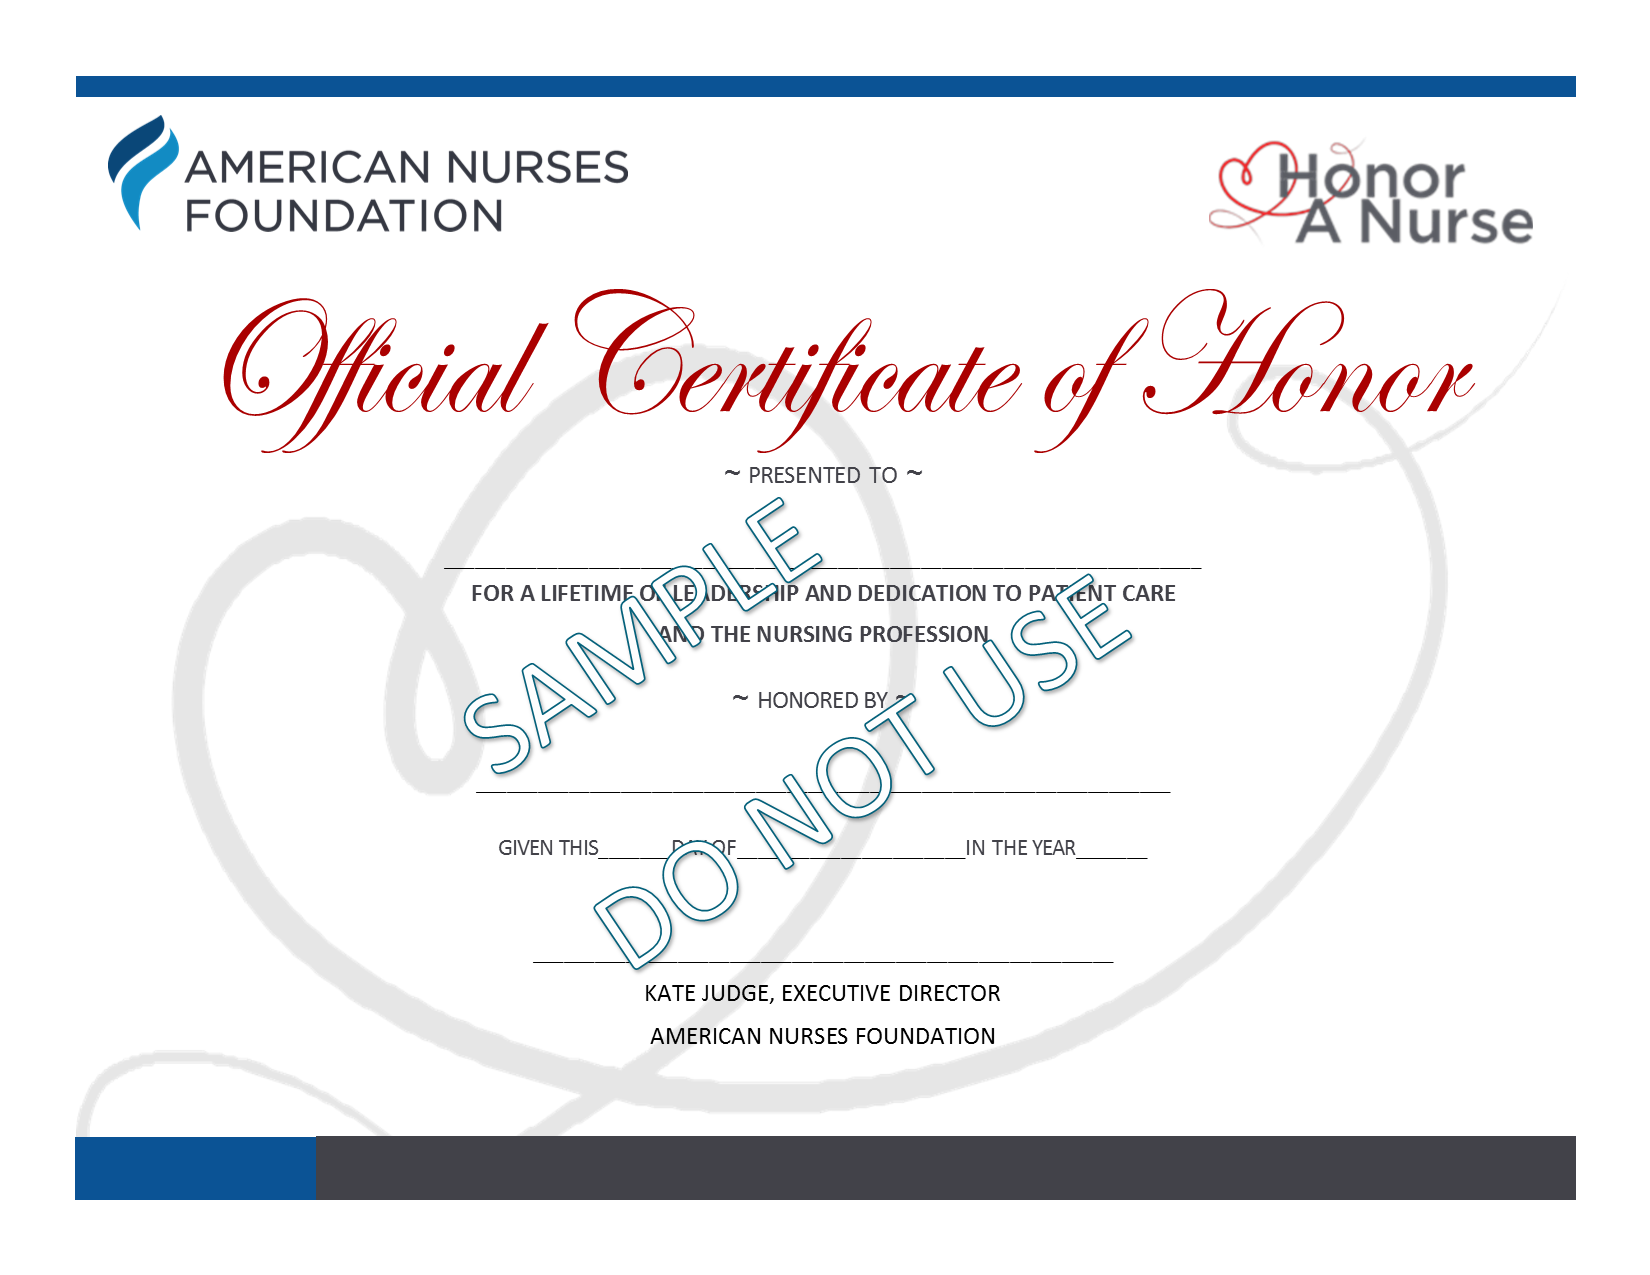 Certificate Of Employment Nurse